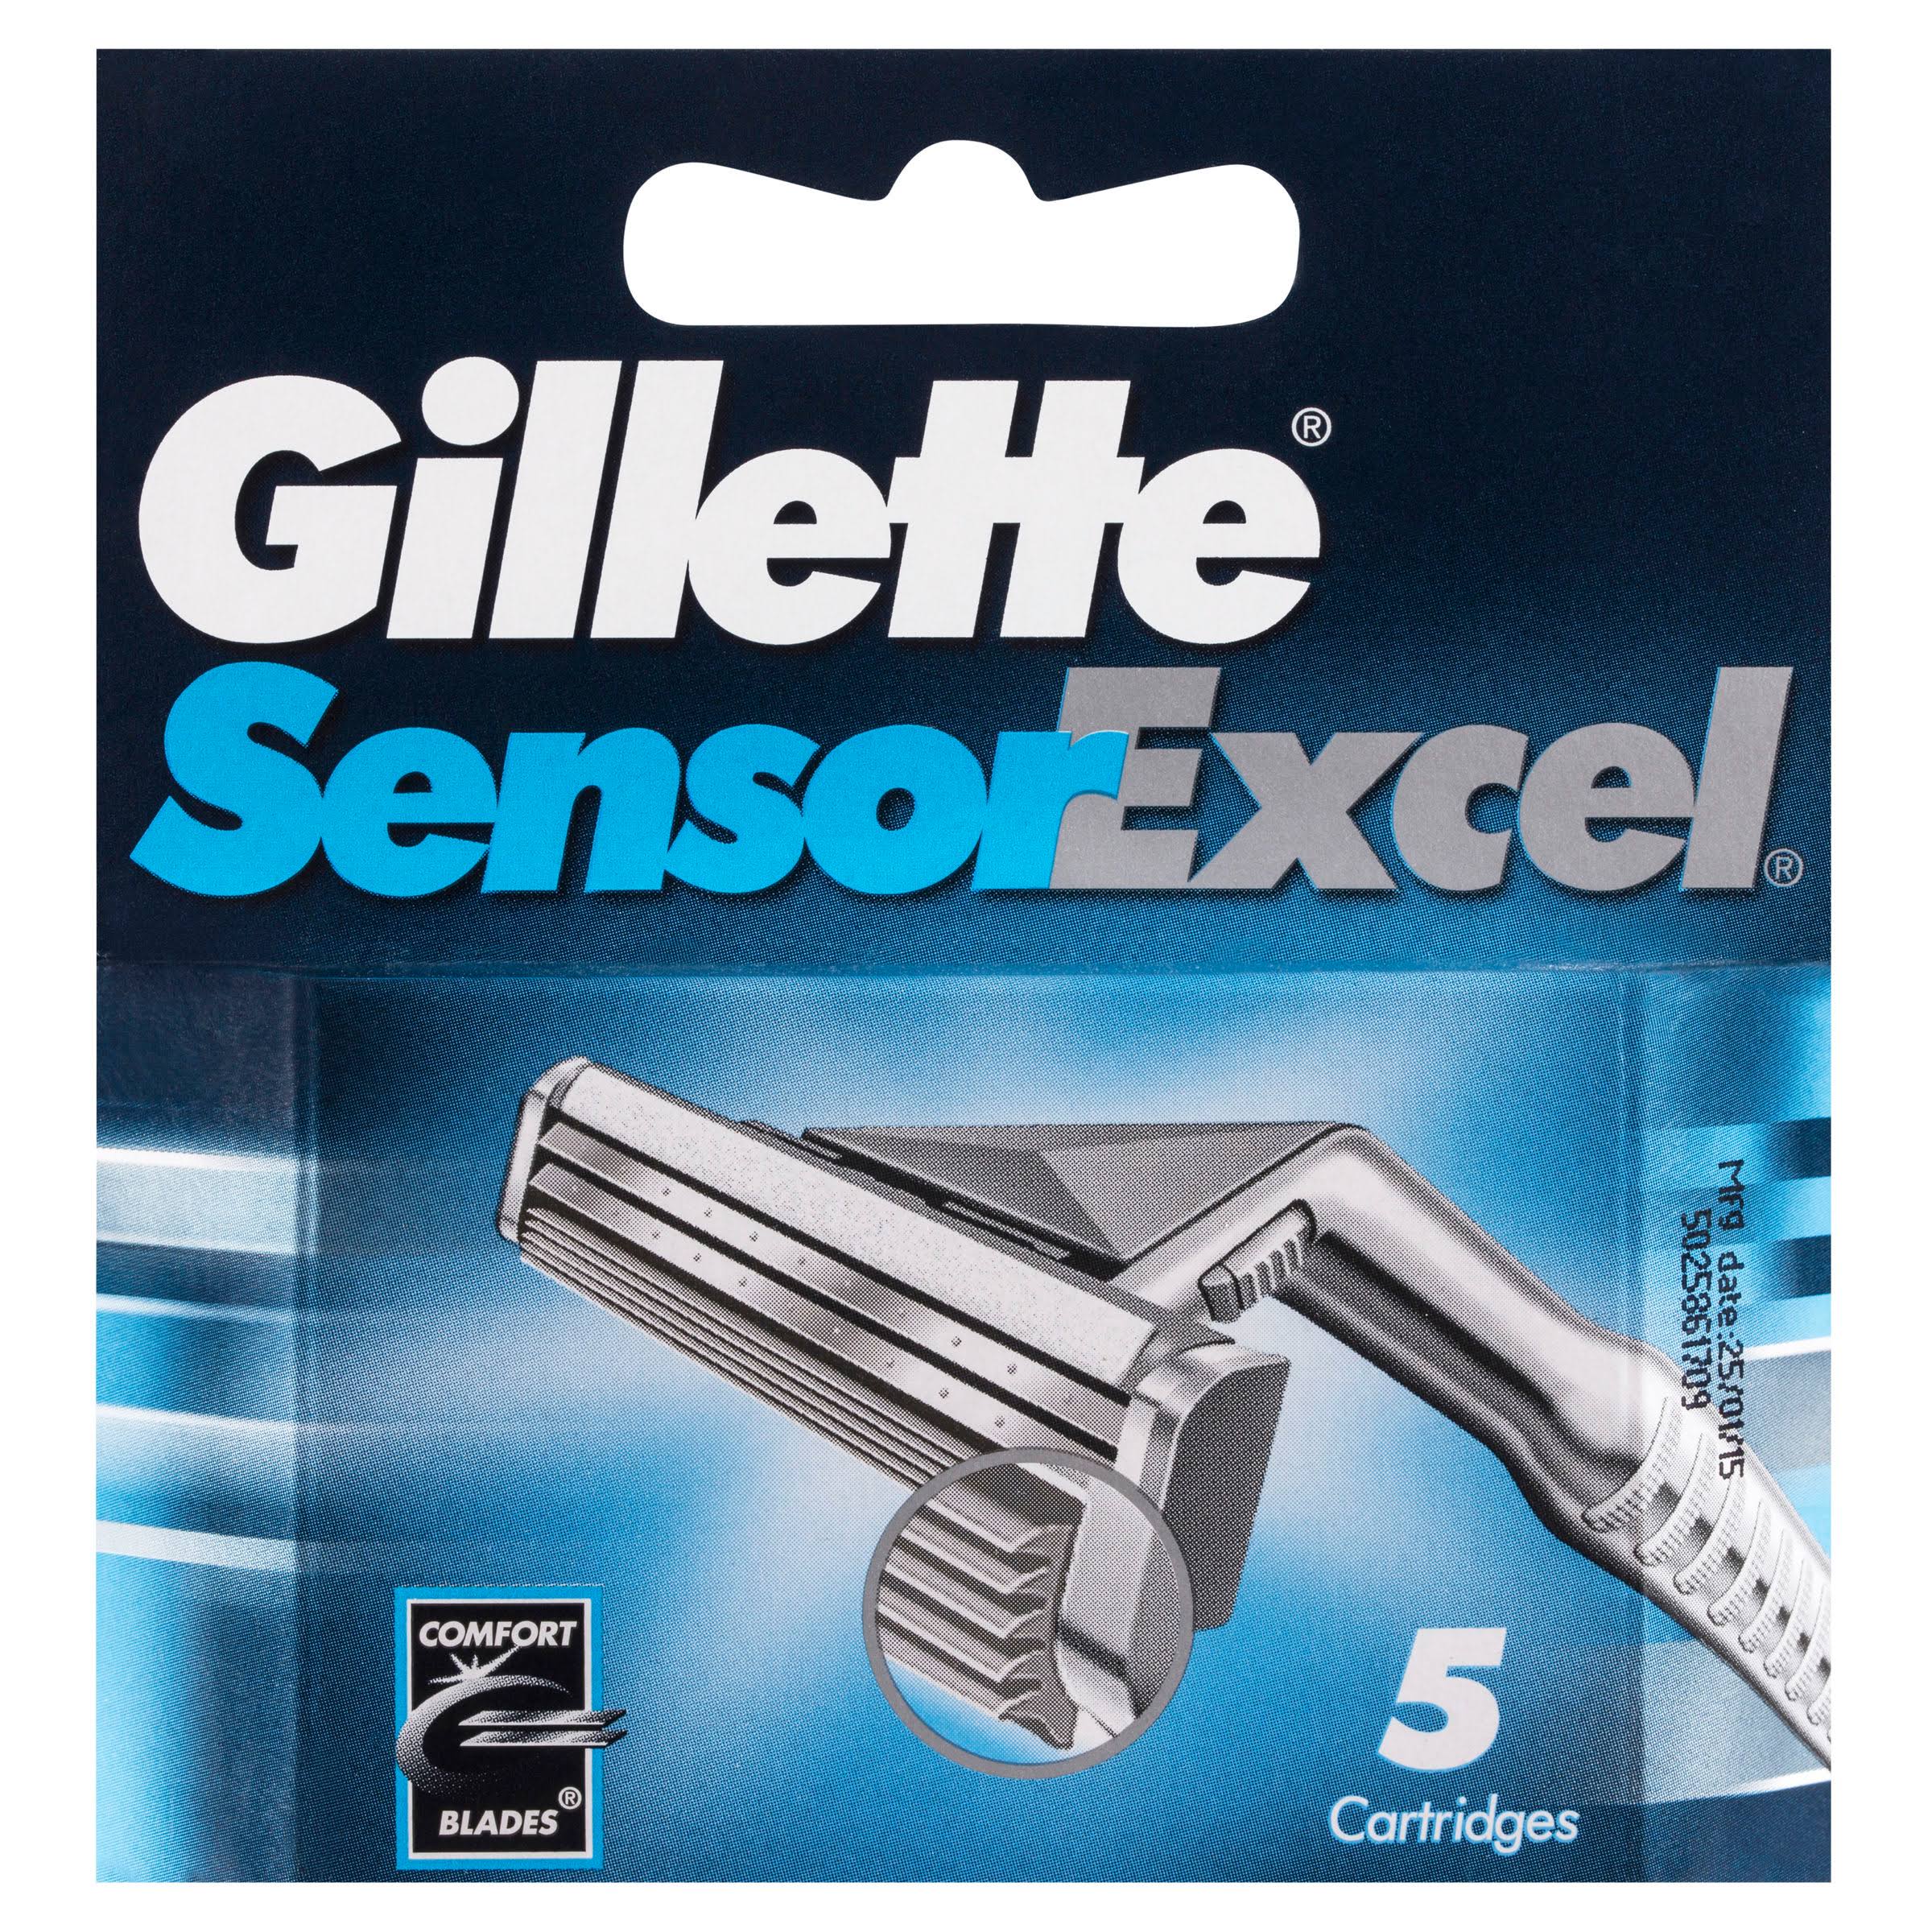 Gillette Sensor Excel Men's Razor Blade Refills - 5pcs